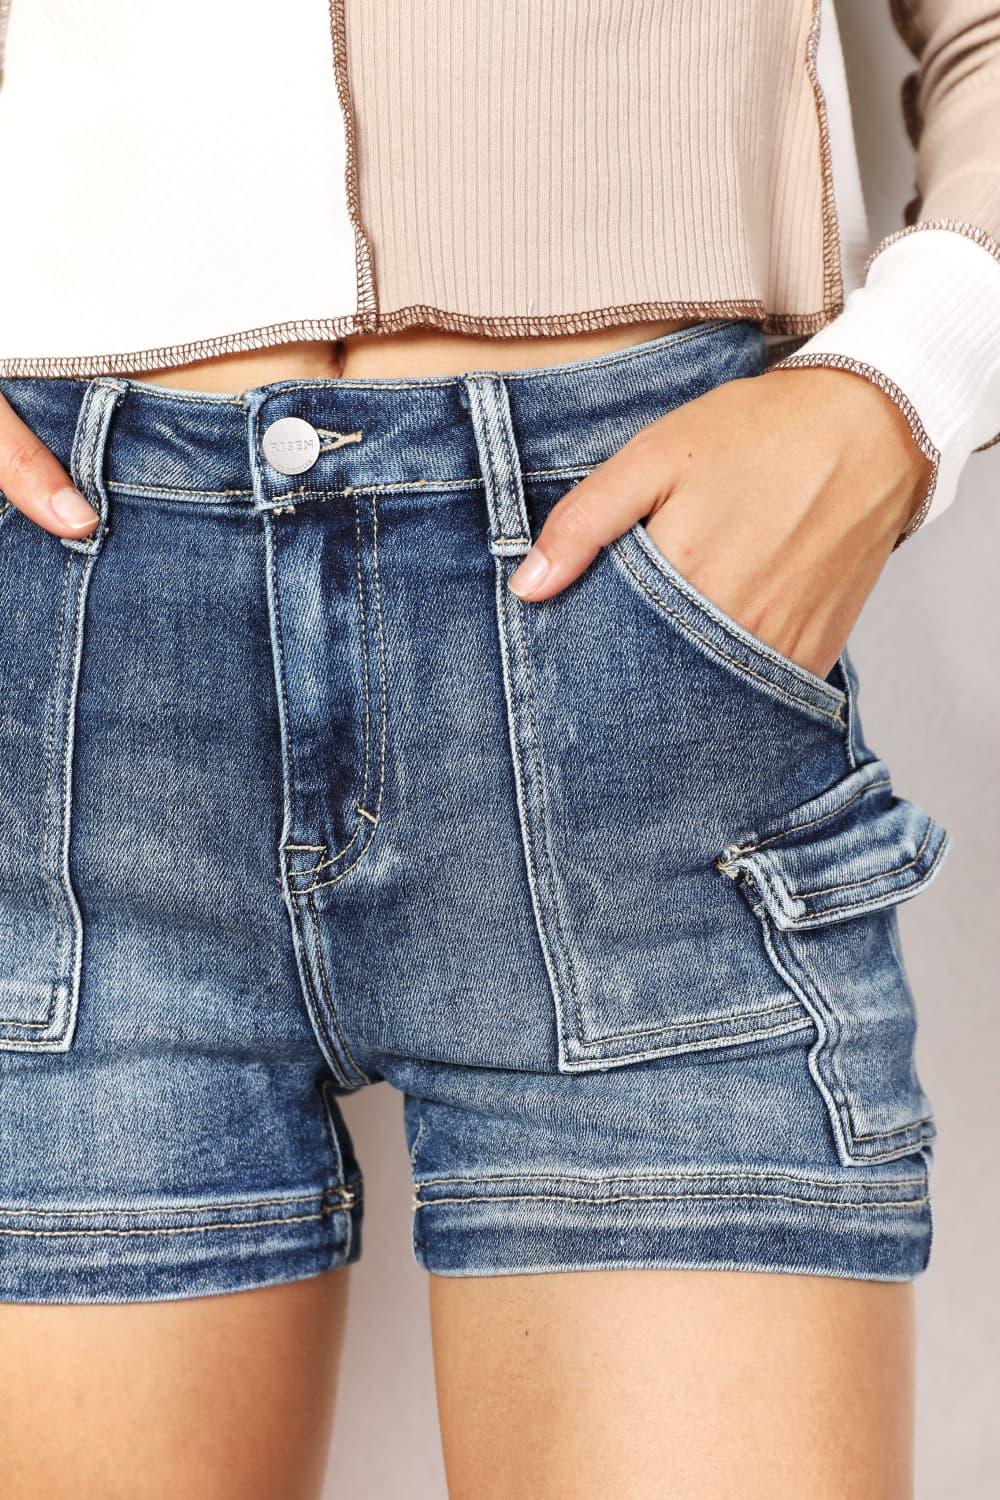 Bona Fide Fashion - Full Size High Rise Side Cargo Pocket Shorts - Women Fashion - Bona Fide Fashion